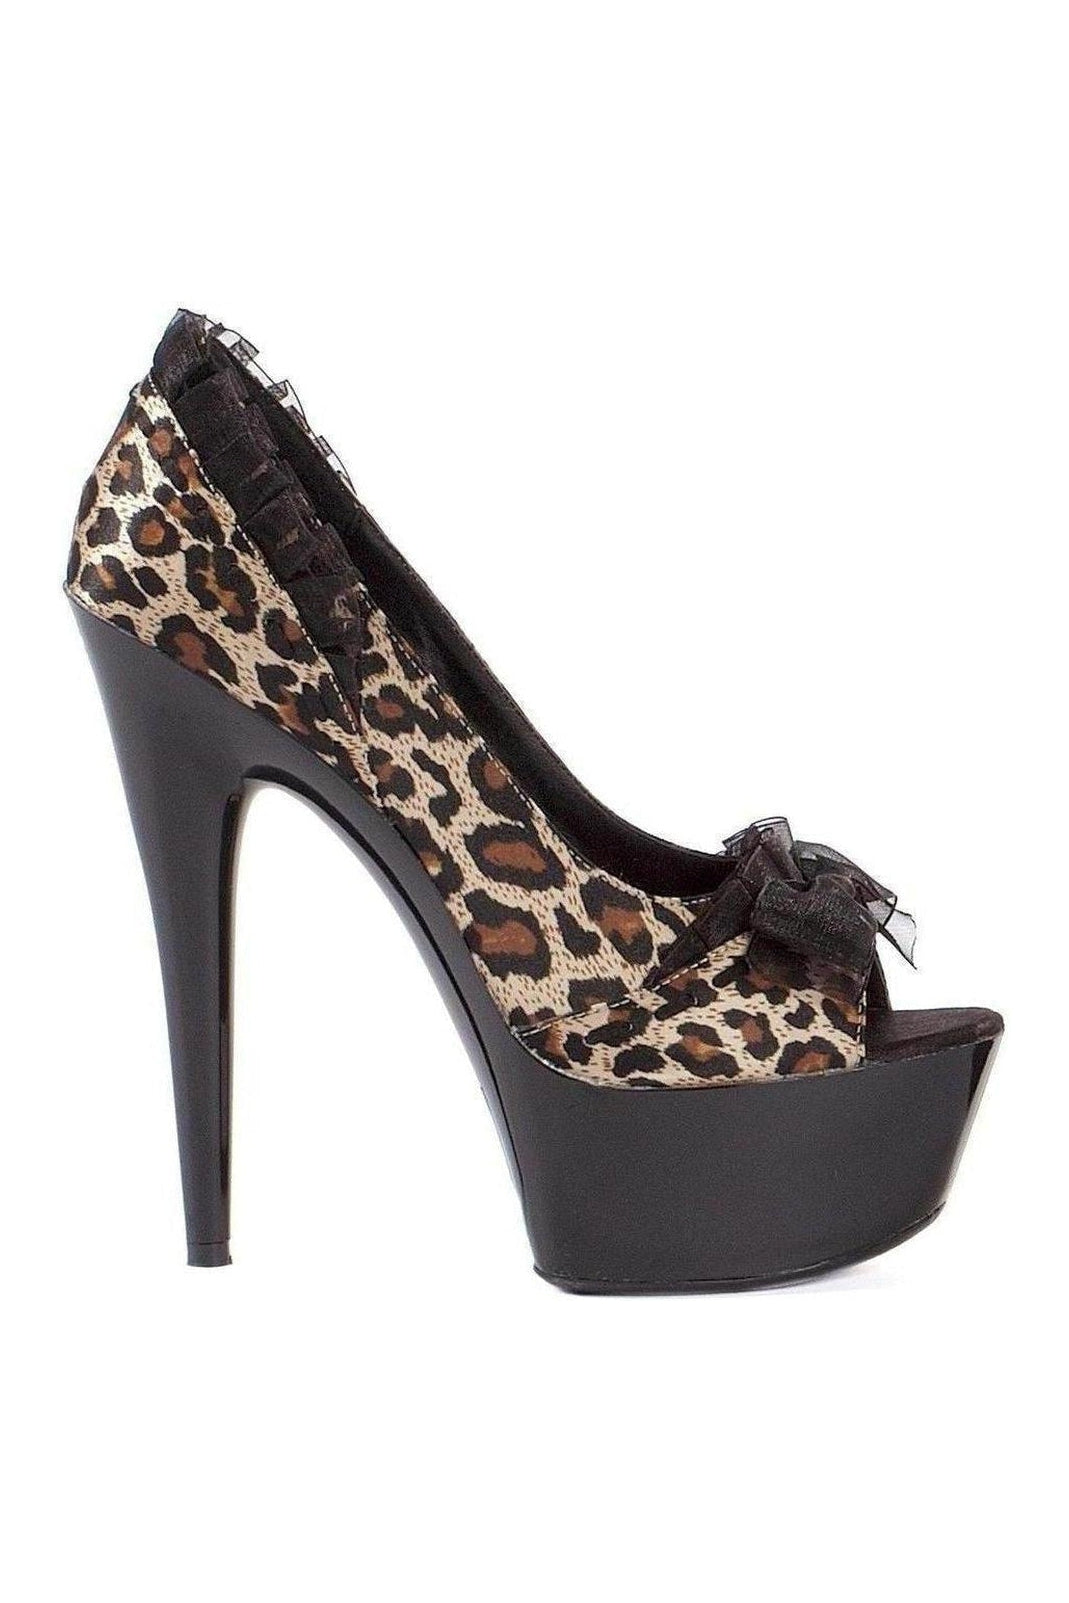 609-JEZEBEL Platform Pump | Leopard Genuine Satin-Ellie Shoes-Animal-Pumps-SEXYSHOES.COM